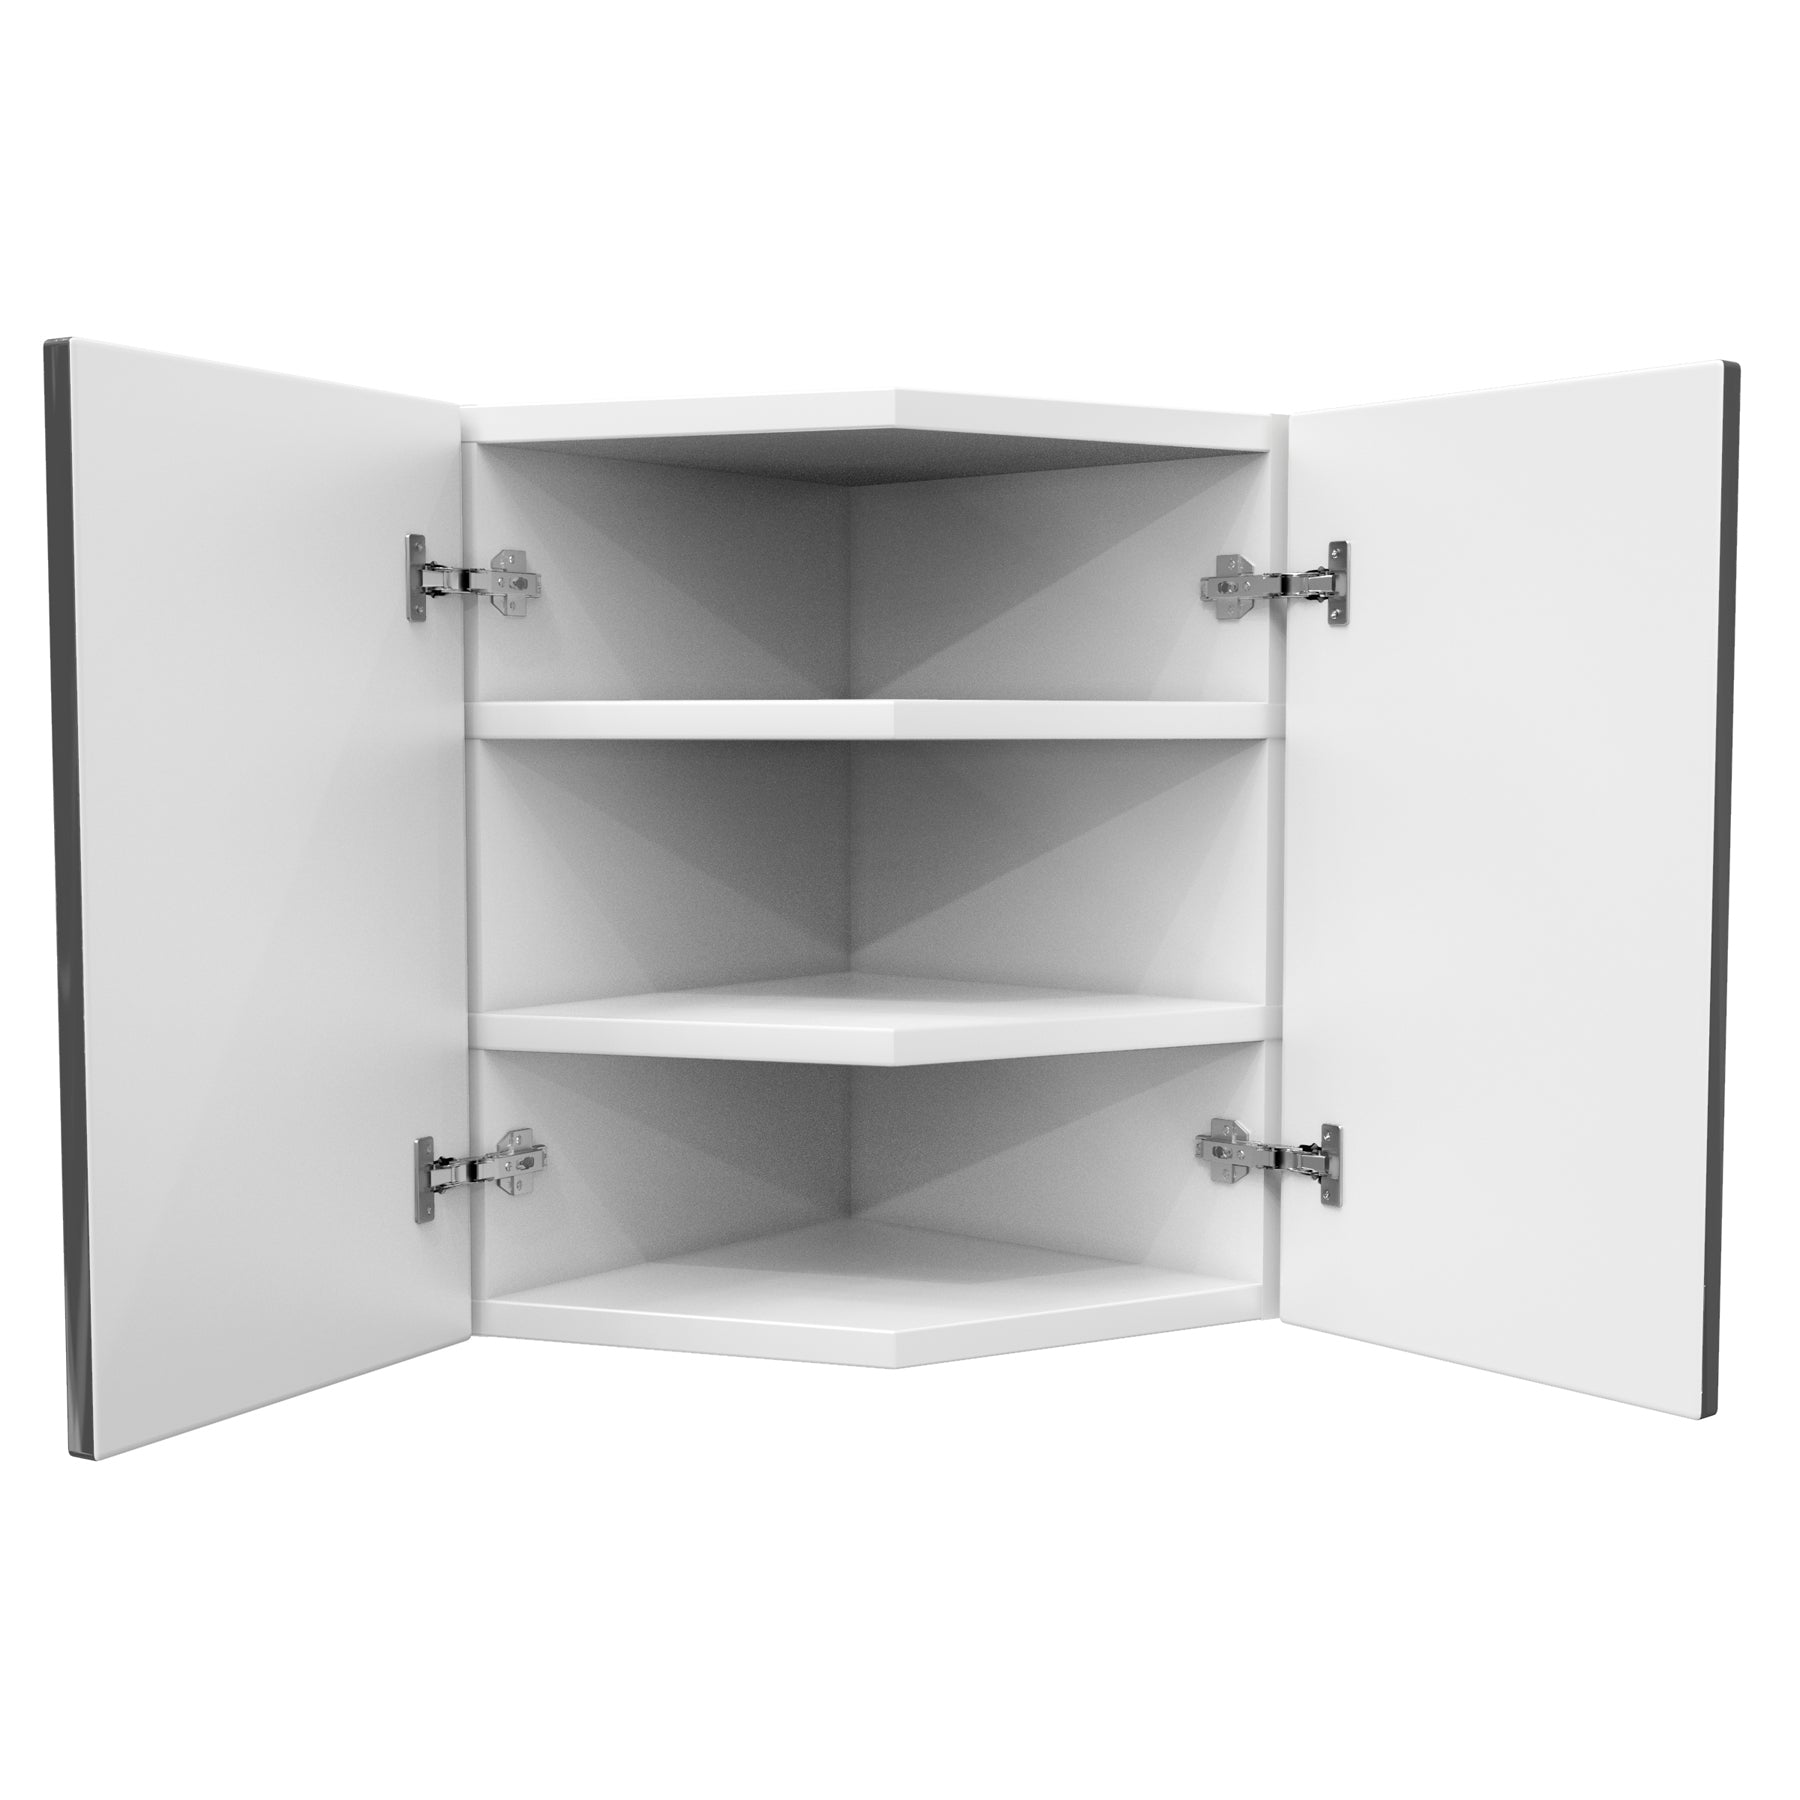 Base End Cabinet | Milano Slate | 24W x 34.5H x 24D